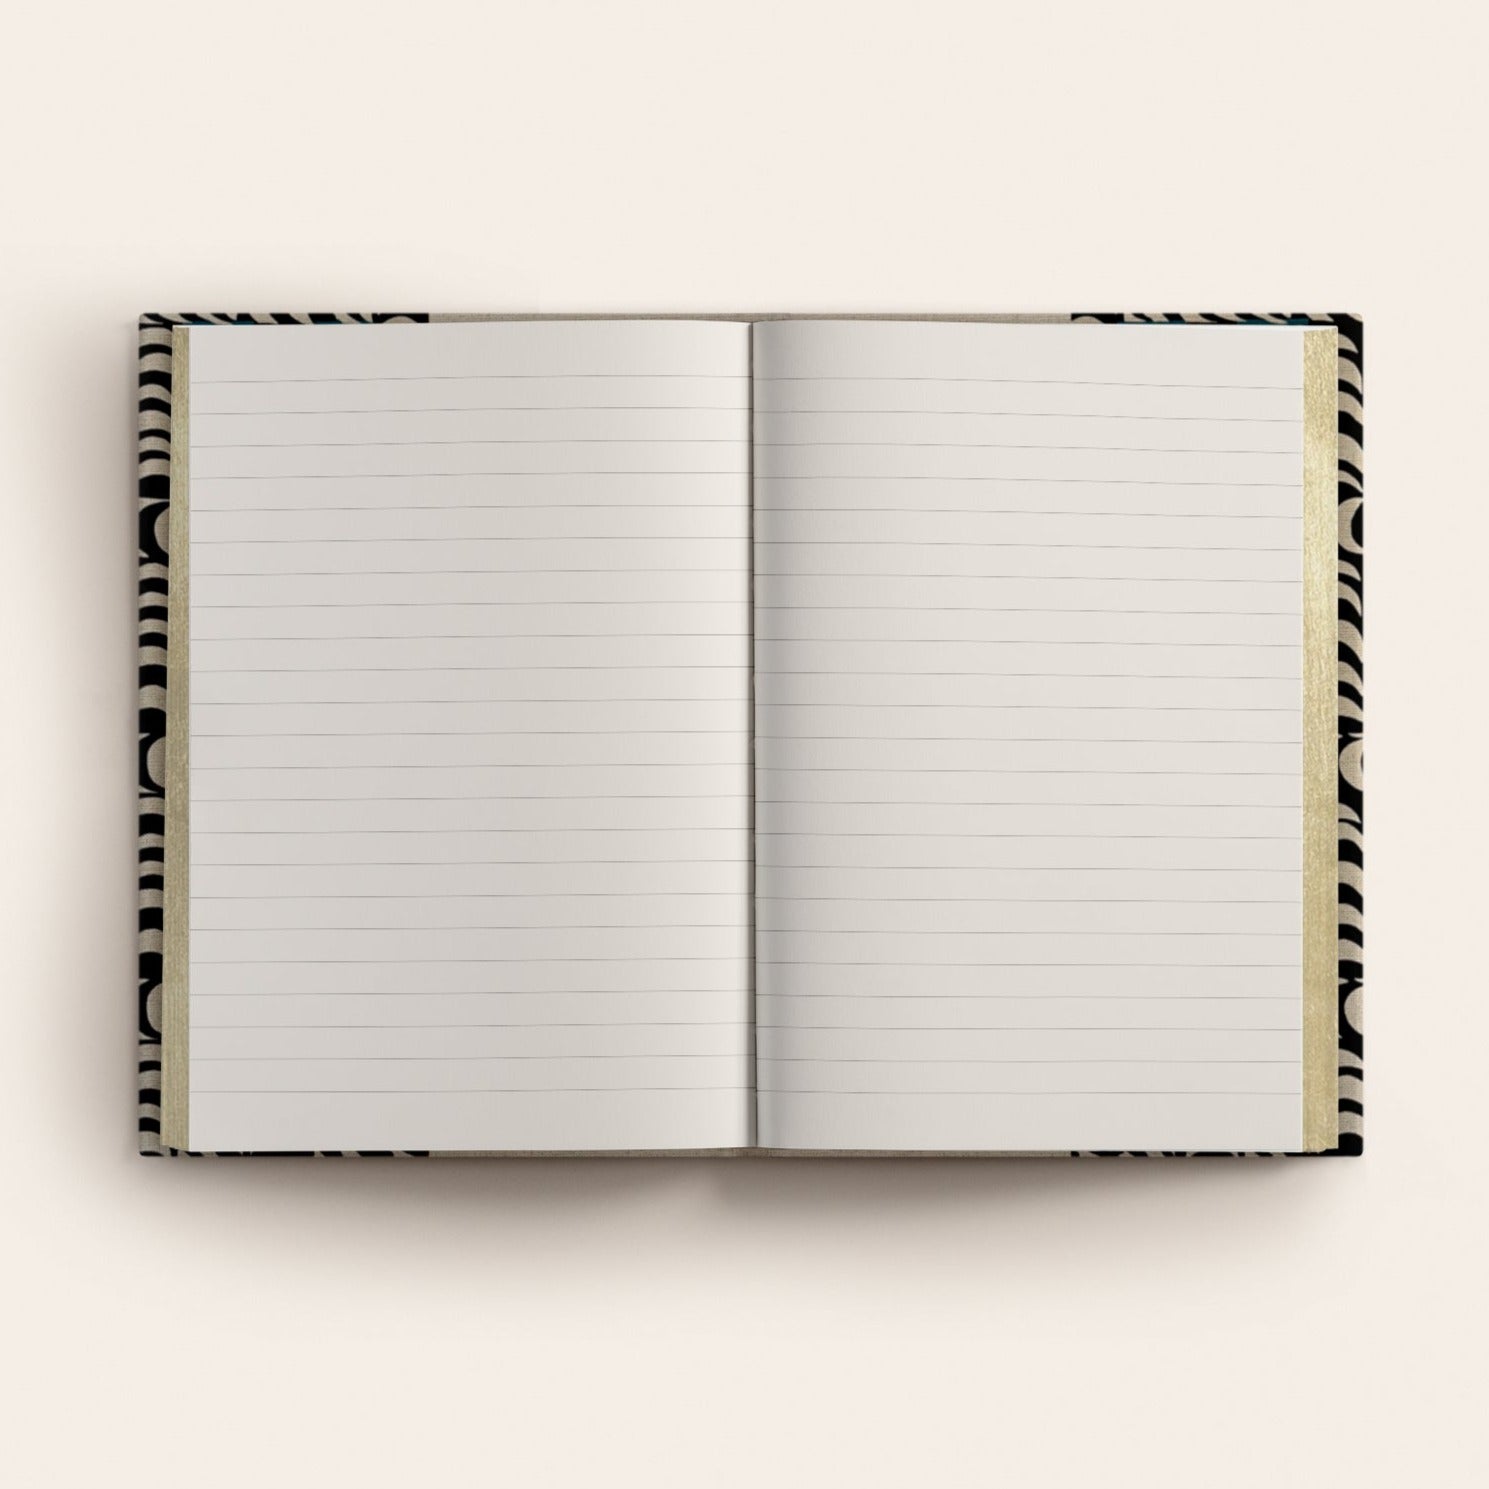 Zebra Moon notebook